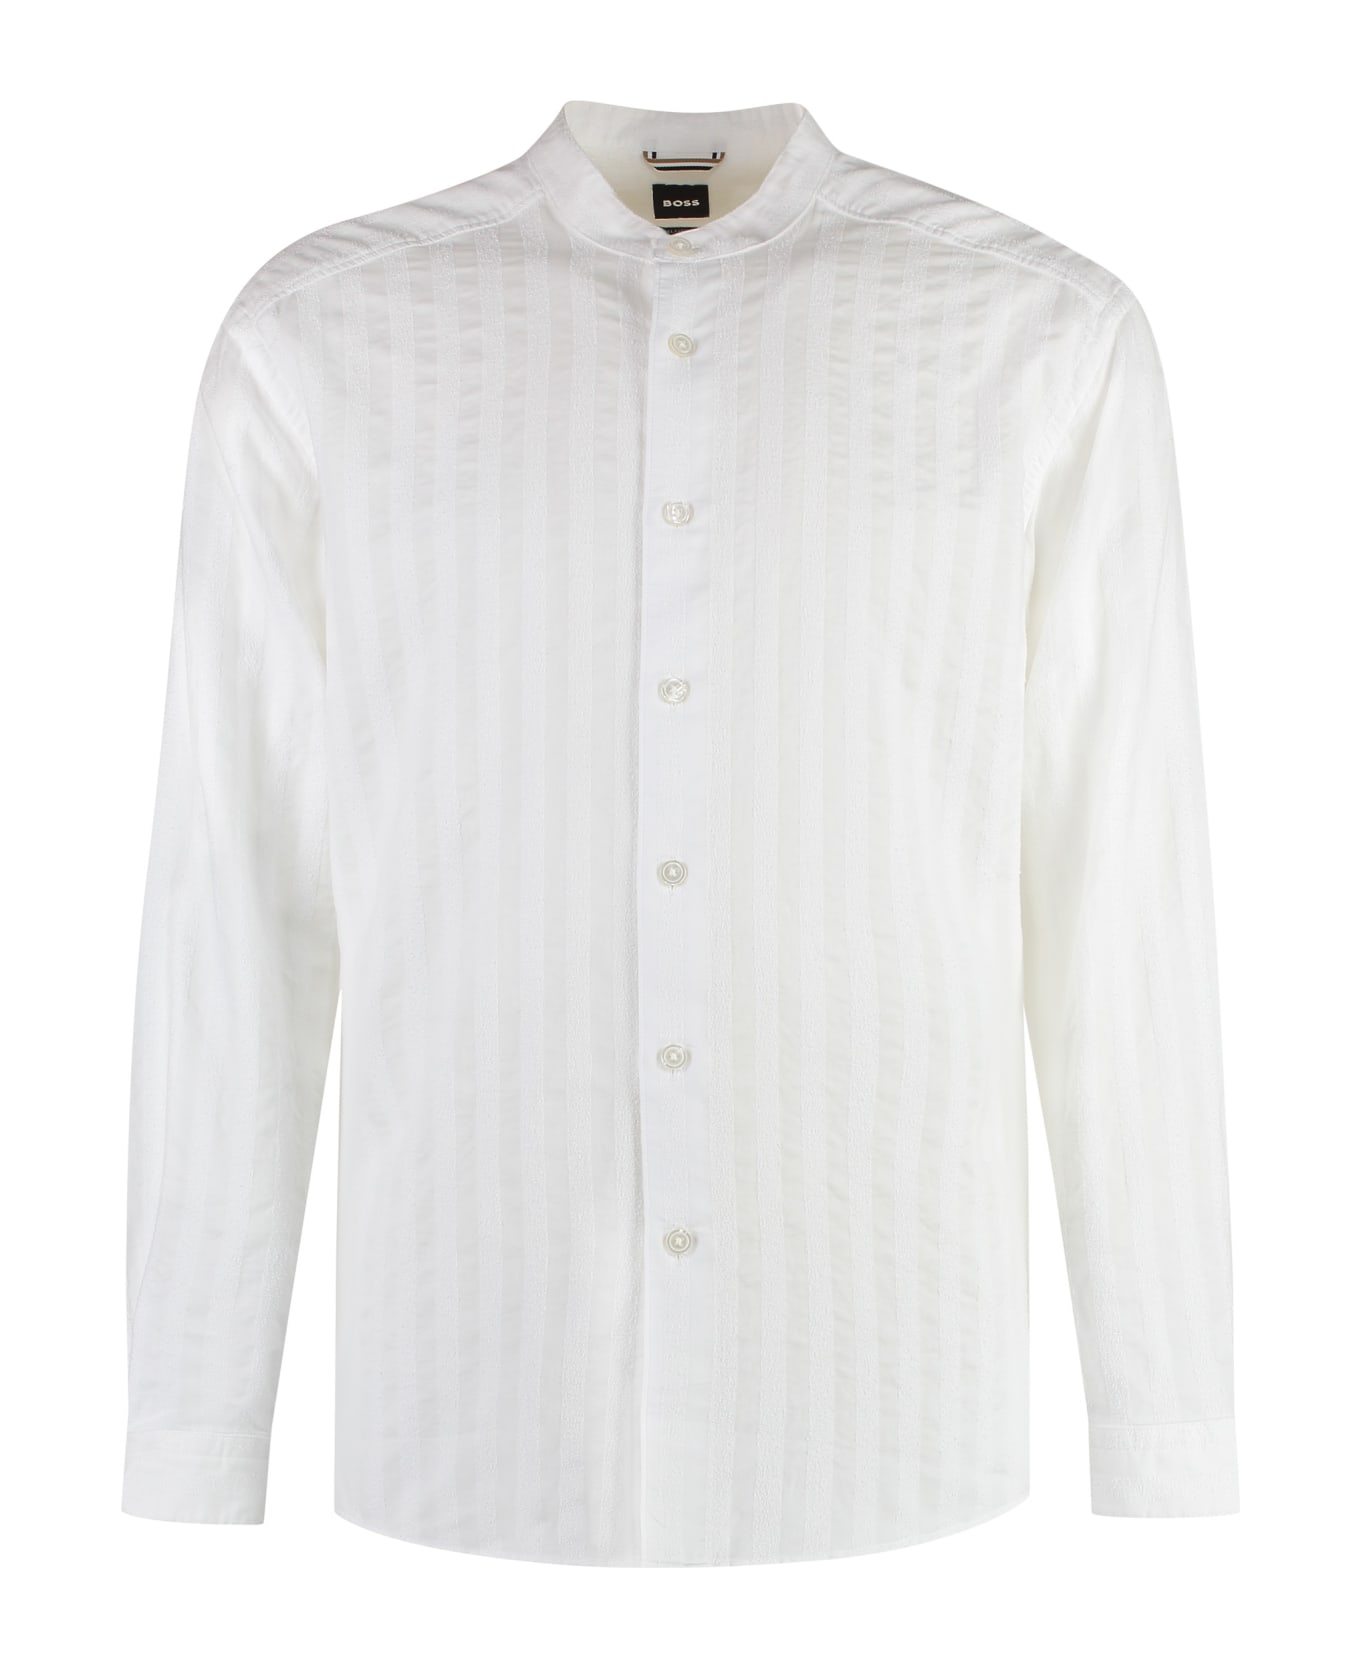 Hugo Boss Cotton Shirt - White